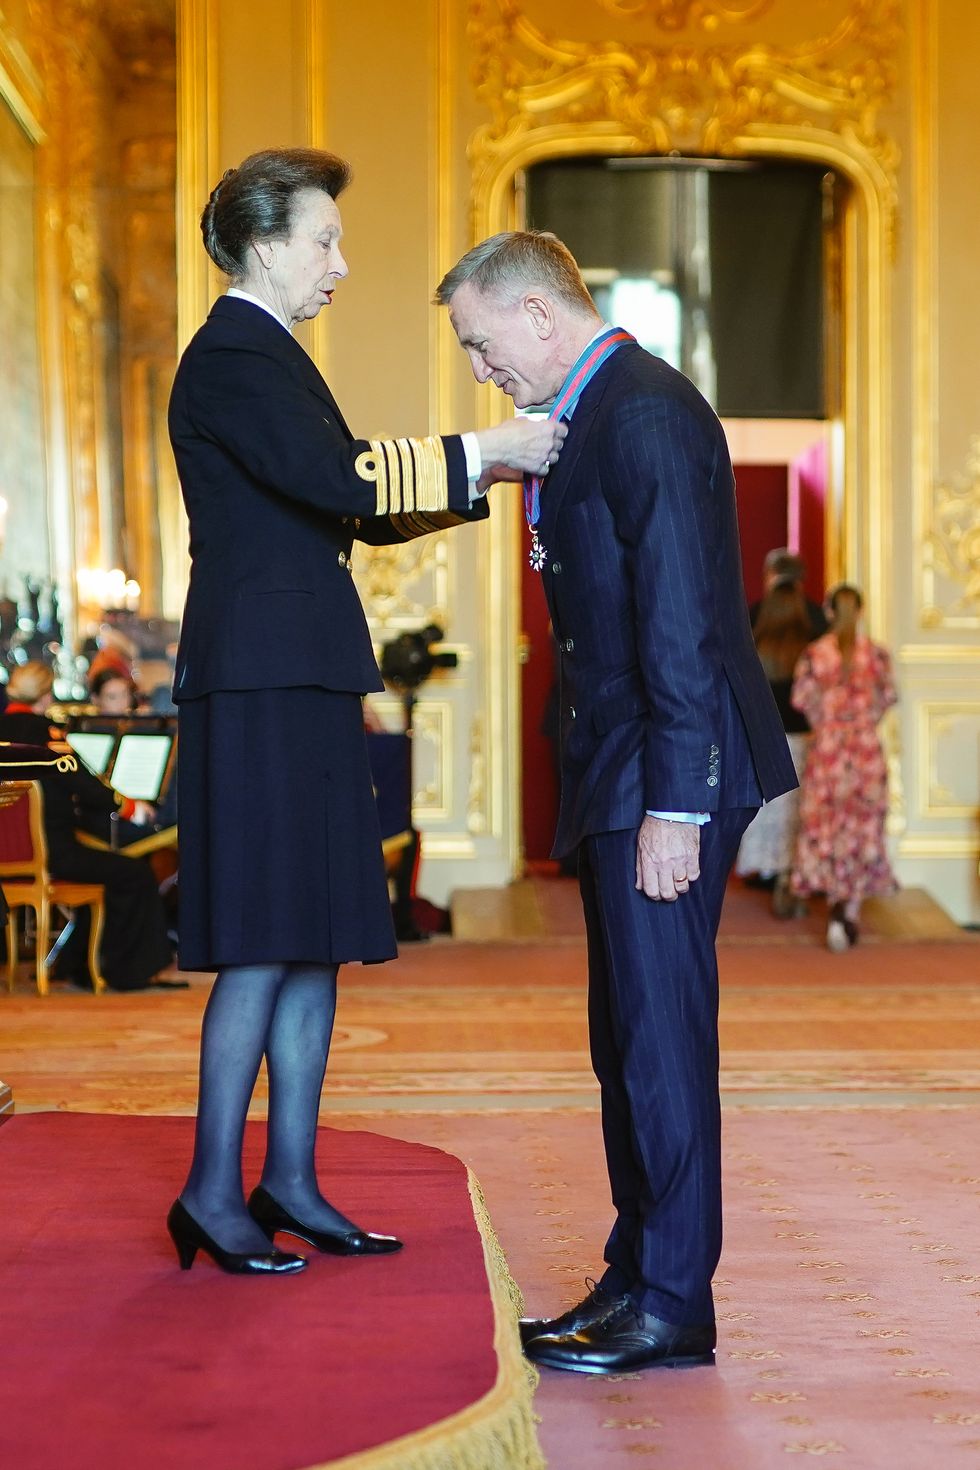 James Bond actor Daniel Craig receives same honour as 007 at Windsor Castle